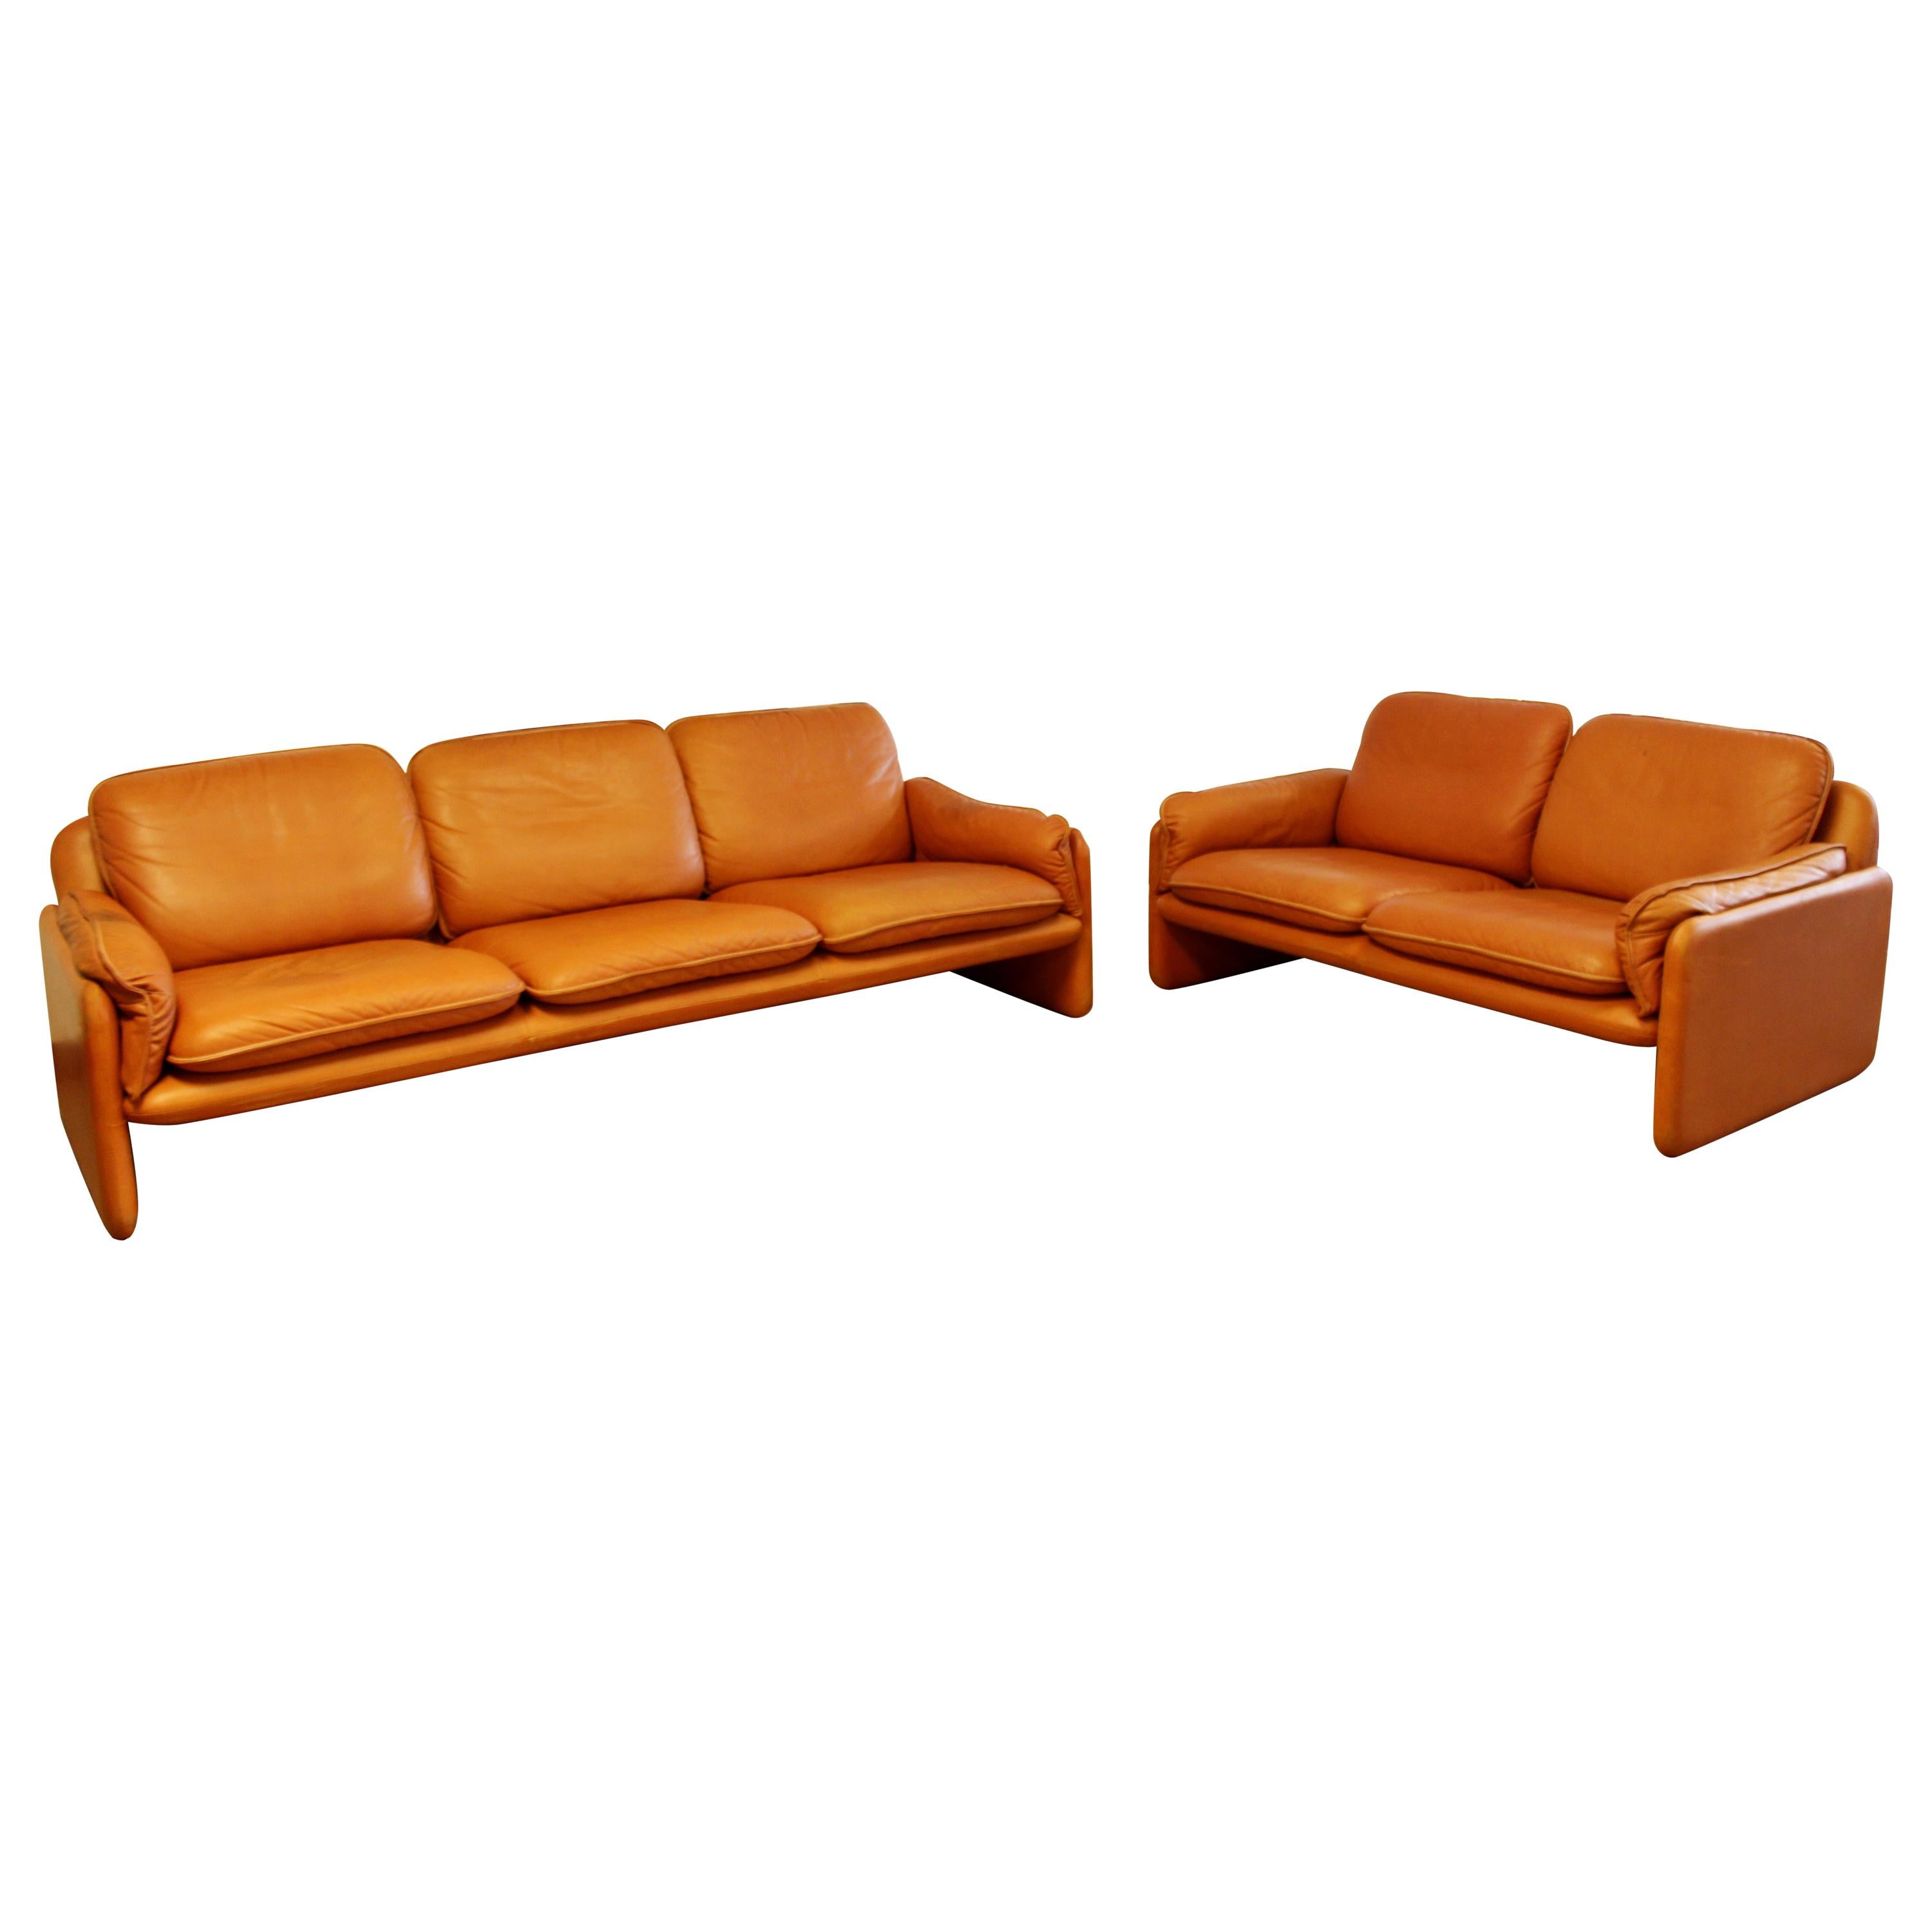 Mid-Century Modern Pair of Leather Sofa & Loveseat by De Sede, Switzerland 1970s